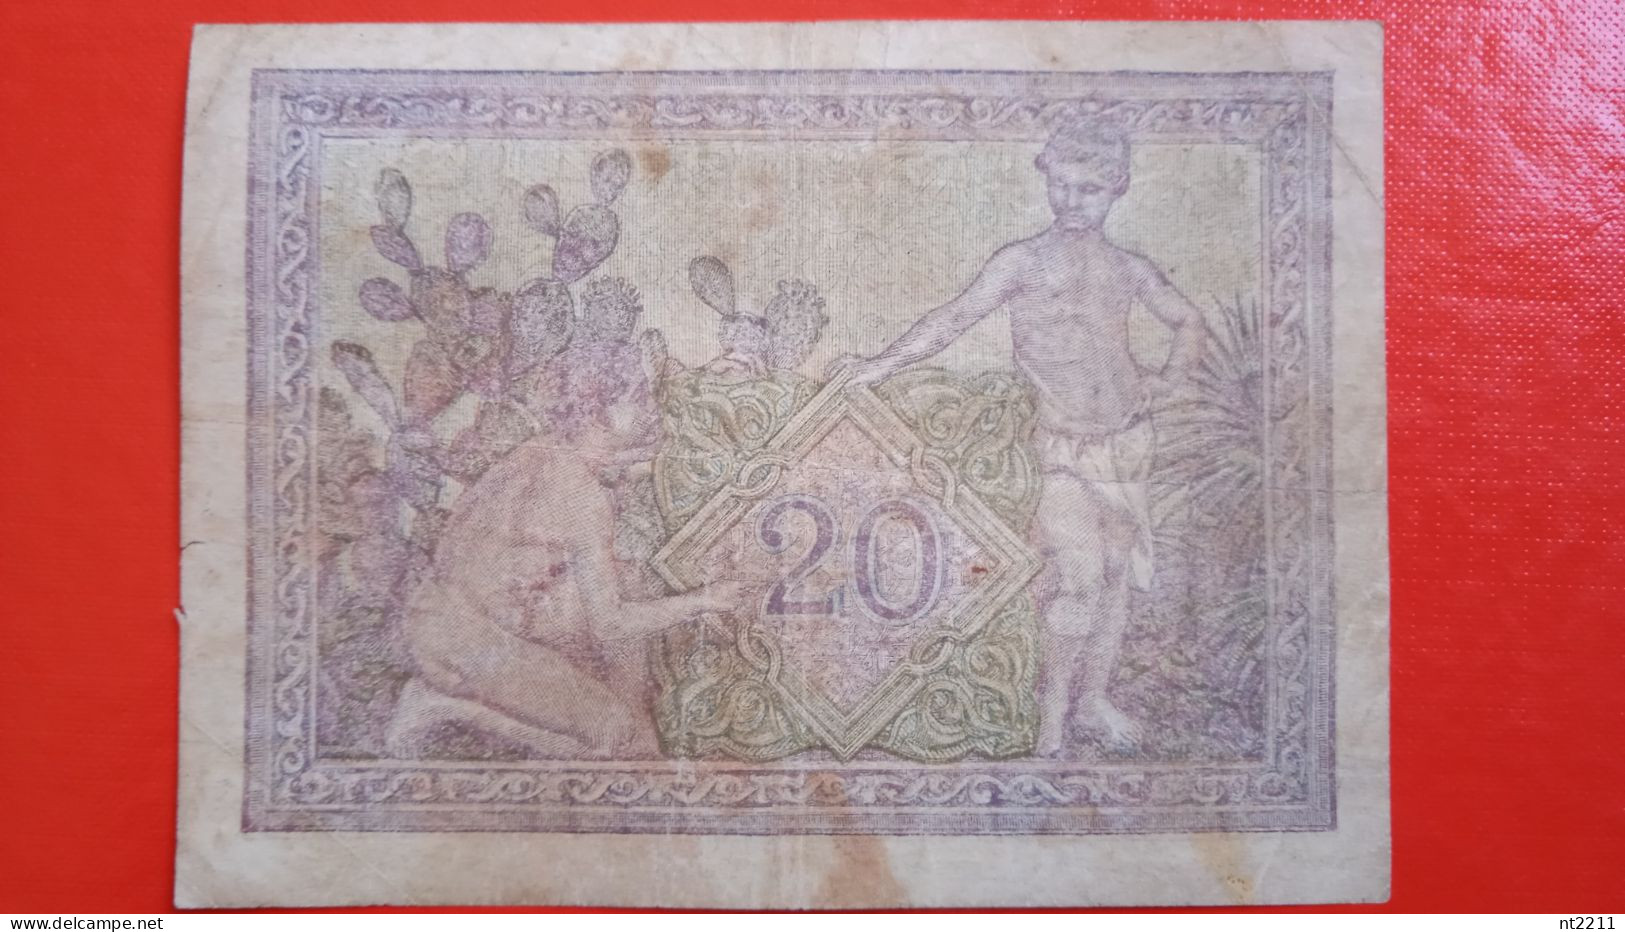 Banknote 20 Francs Algeria 1942 - Algérie